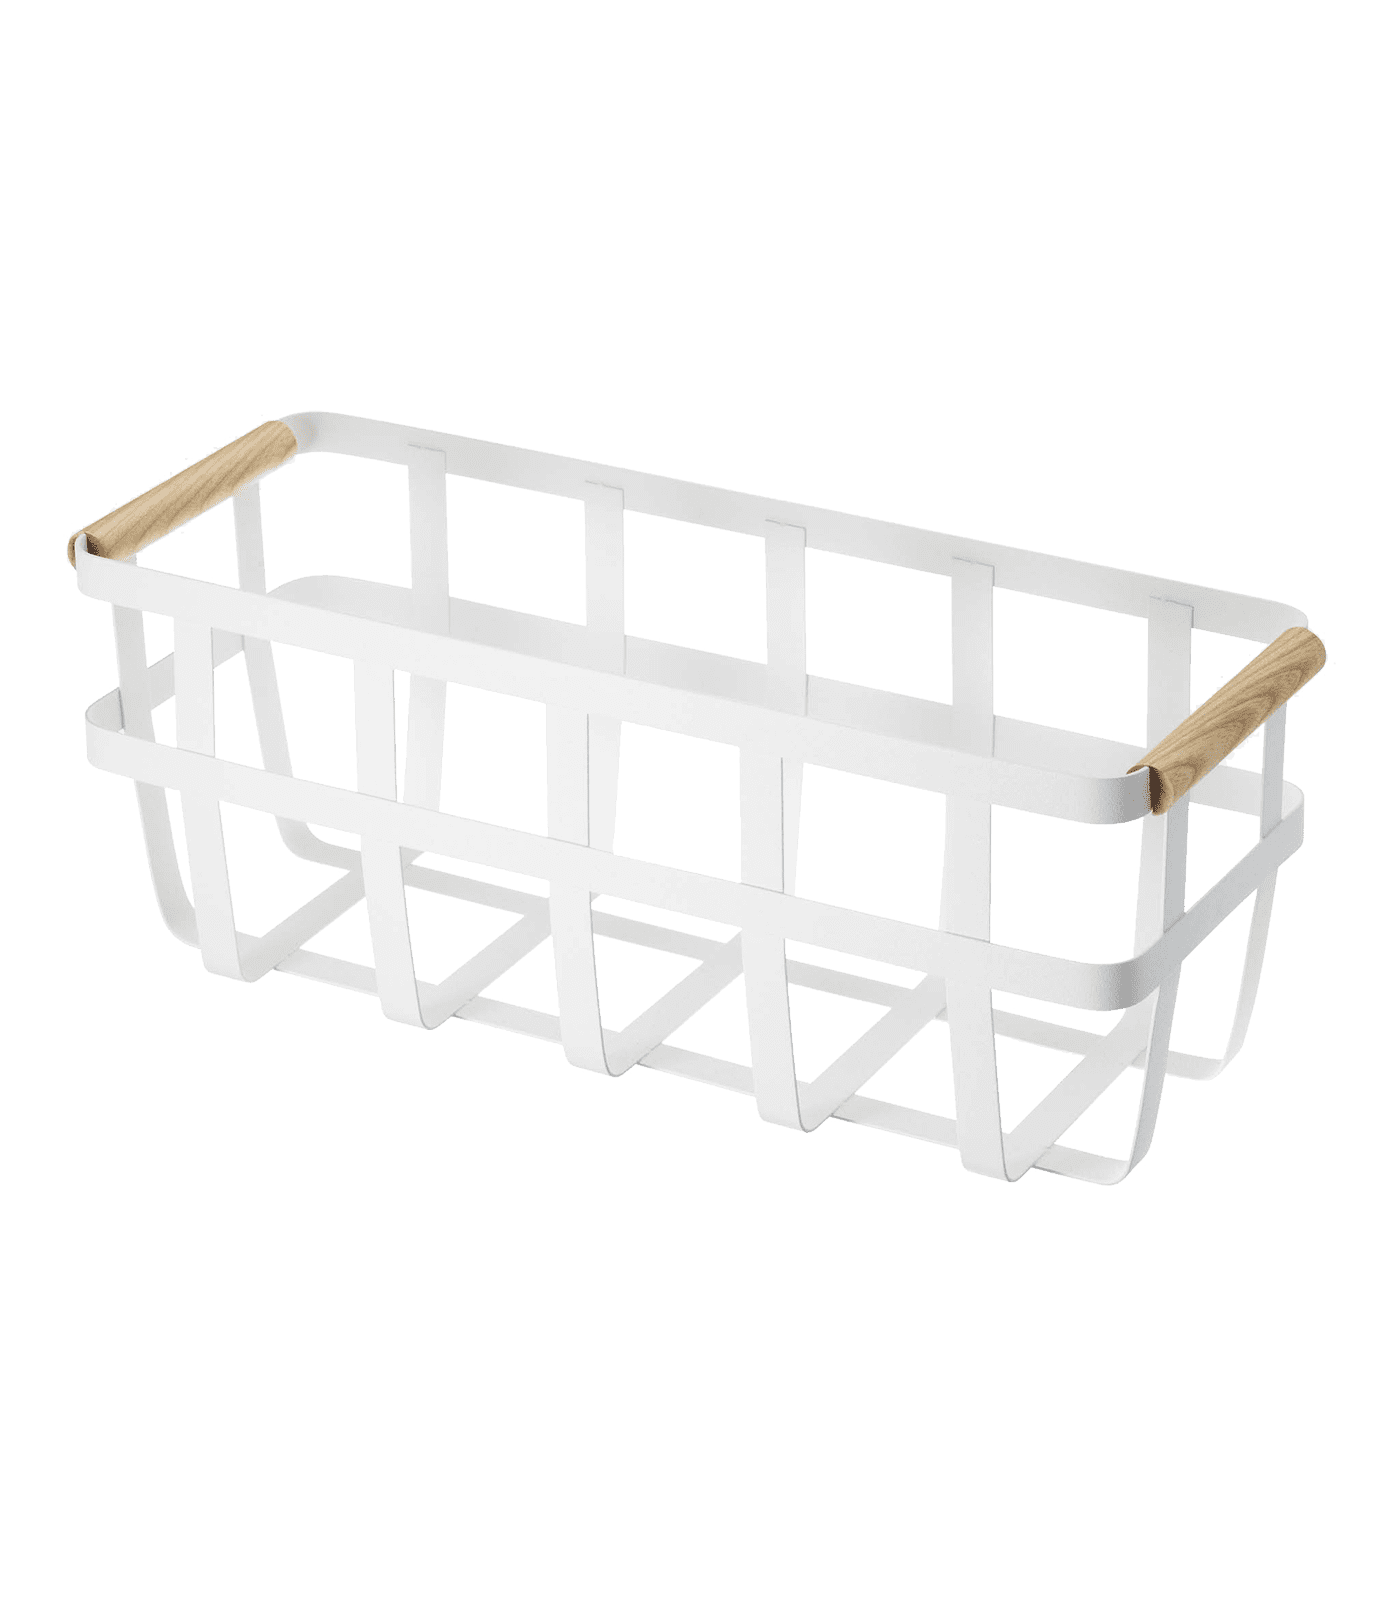 Tosca White Slim Steel and Wood Storage Basket